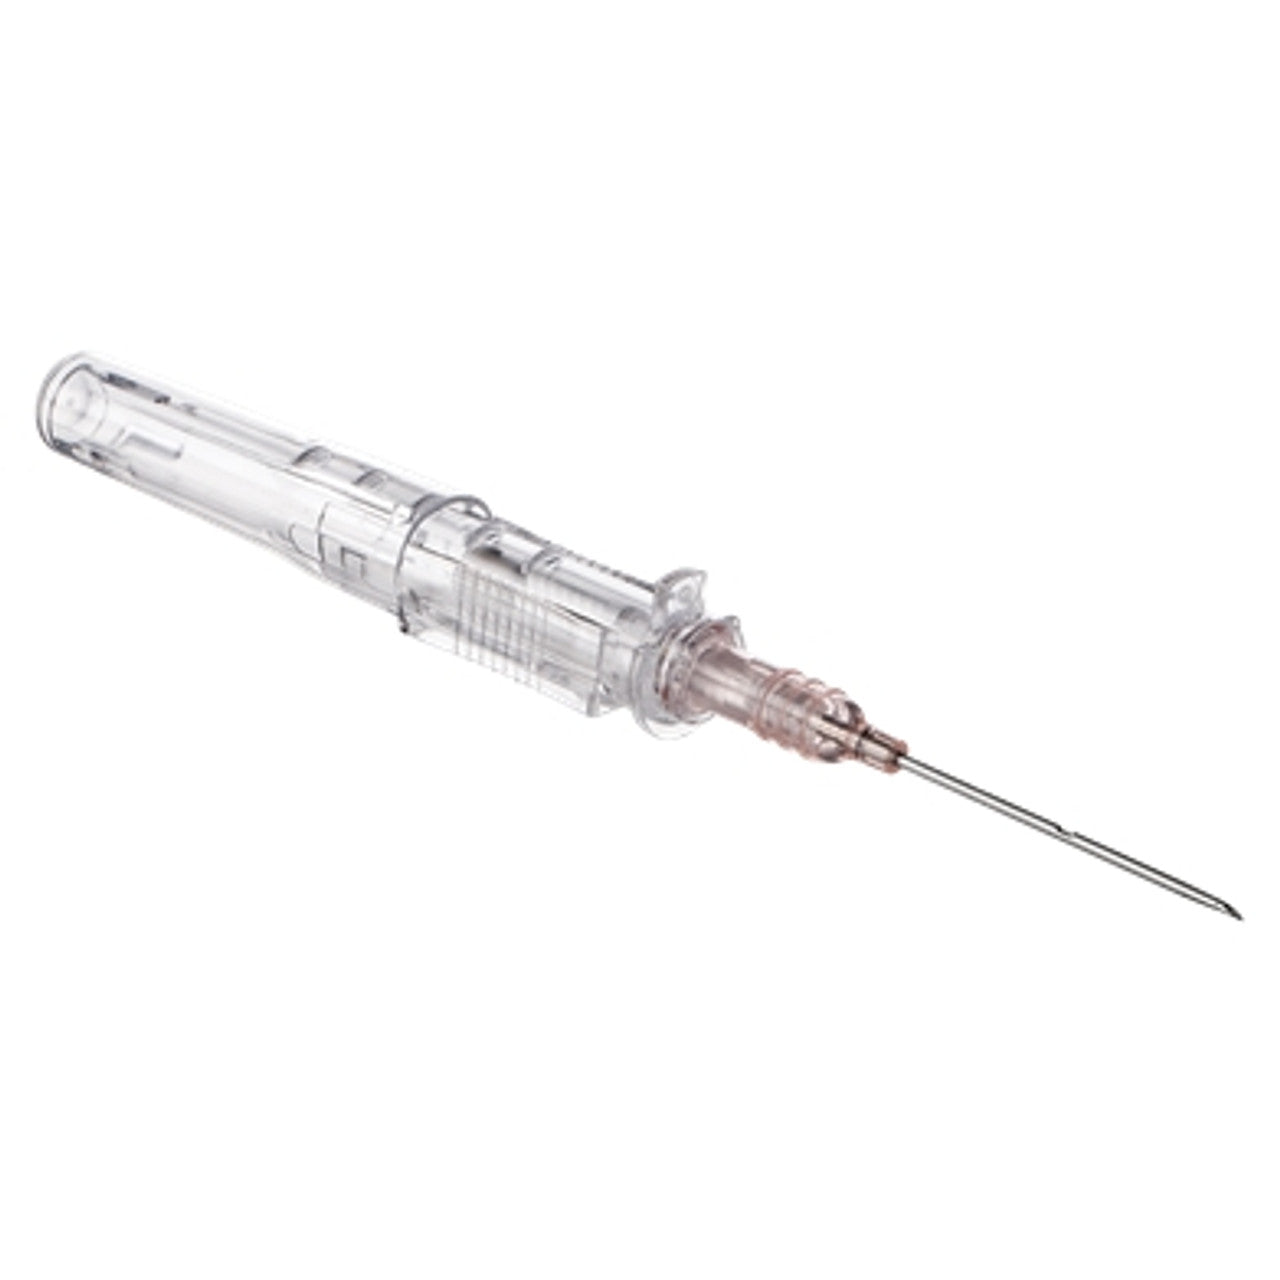 SMITHS MEDICAL 326510 ViaValve IV Safety Catheter, 18G x 1 1/4", Green, 200/cs RX ONLY